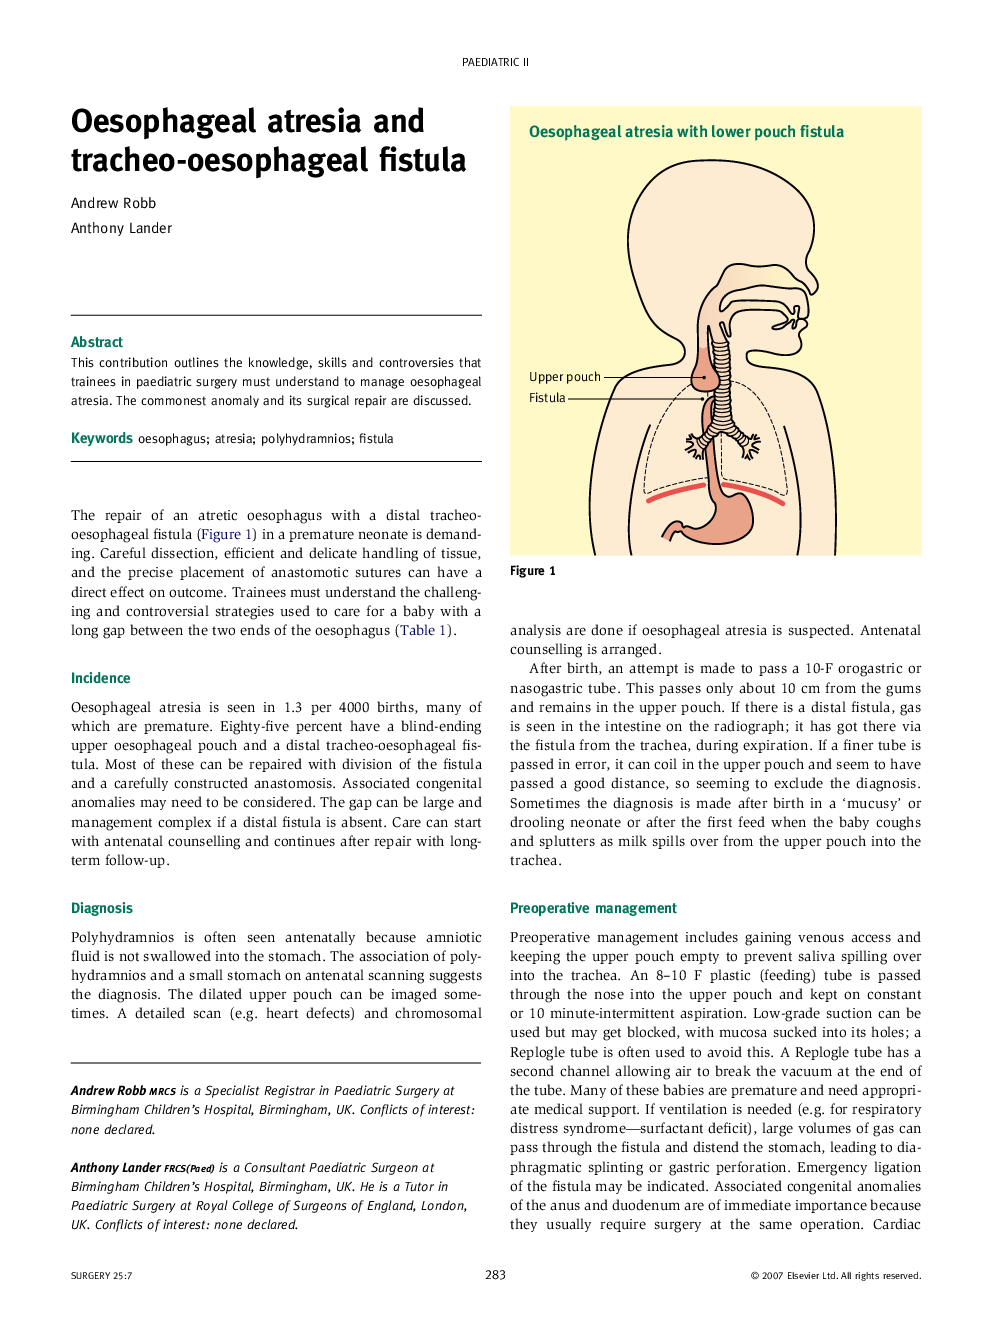 Oesophageal atresia and tracheo-oesophageal fistula